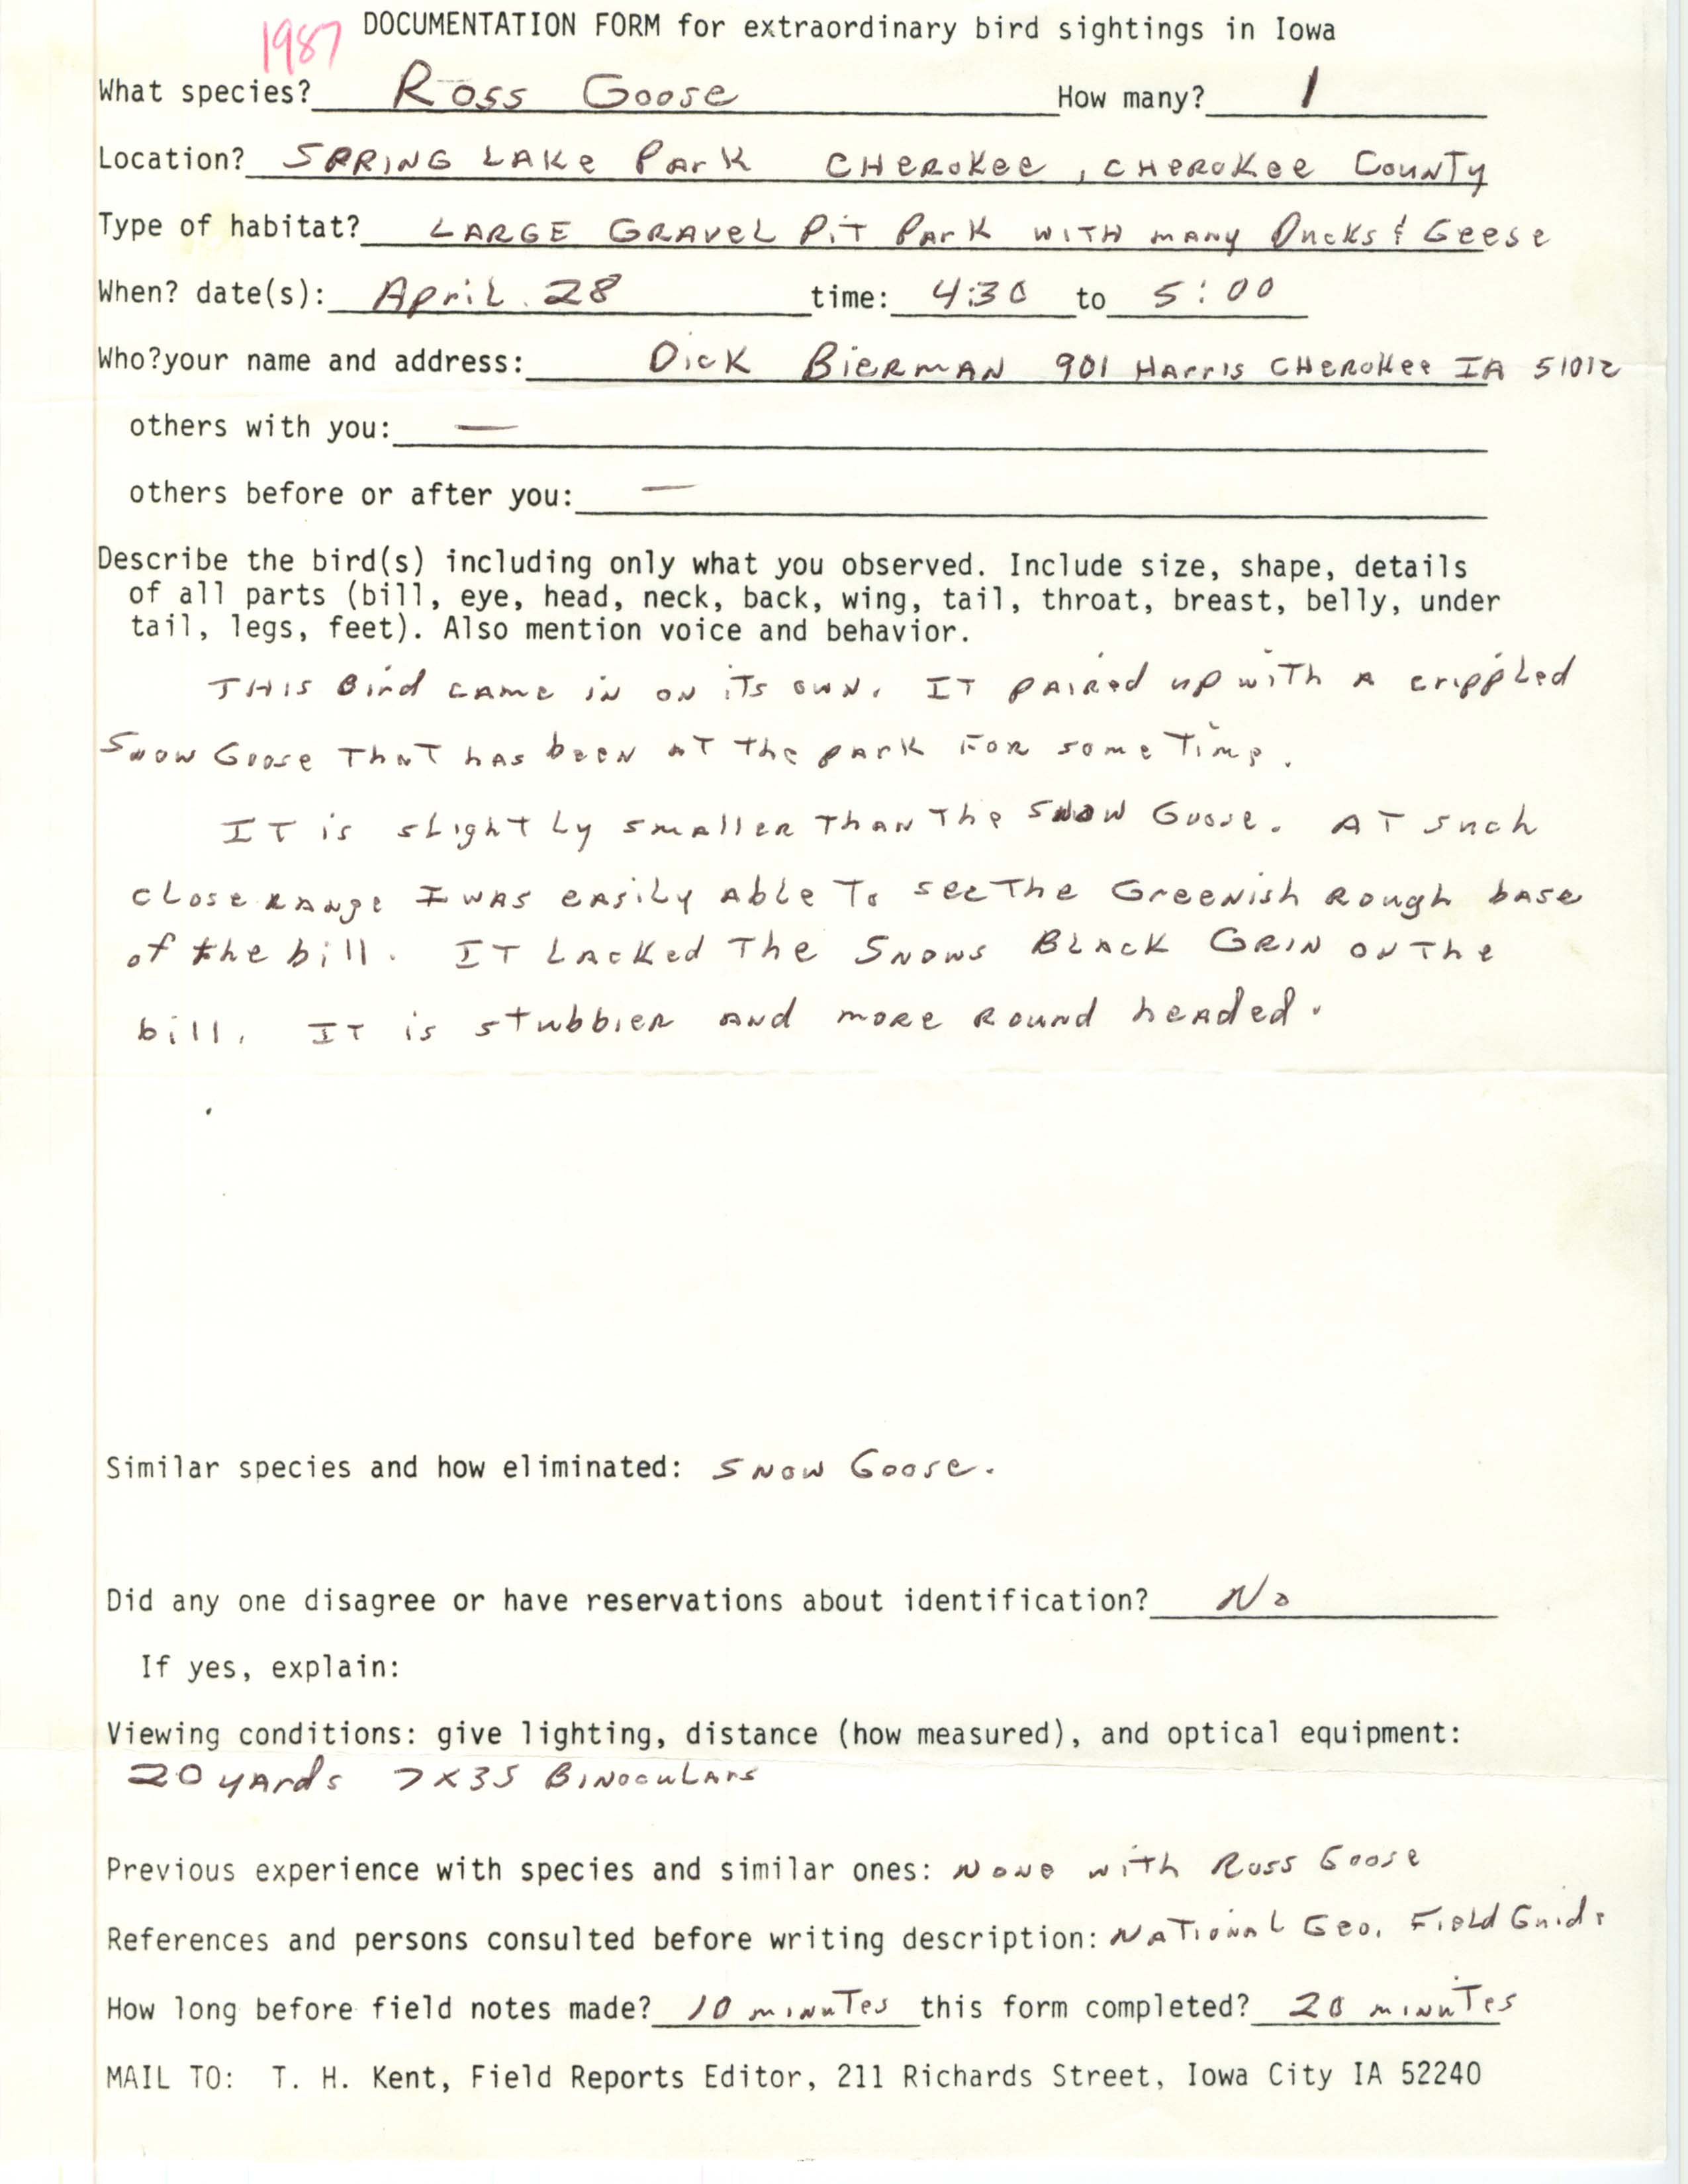 Rare bird documentation form for Ross' Goose at Spring Lake Park in Cherokee, 1987